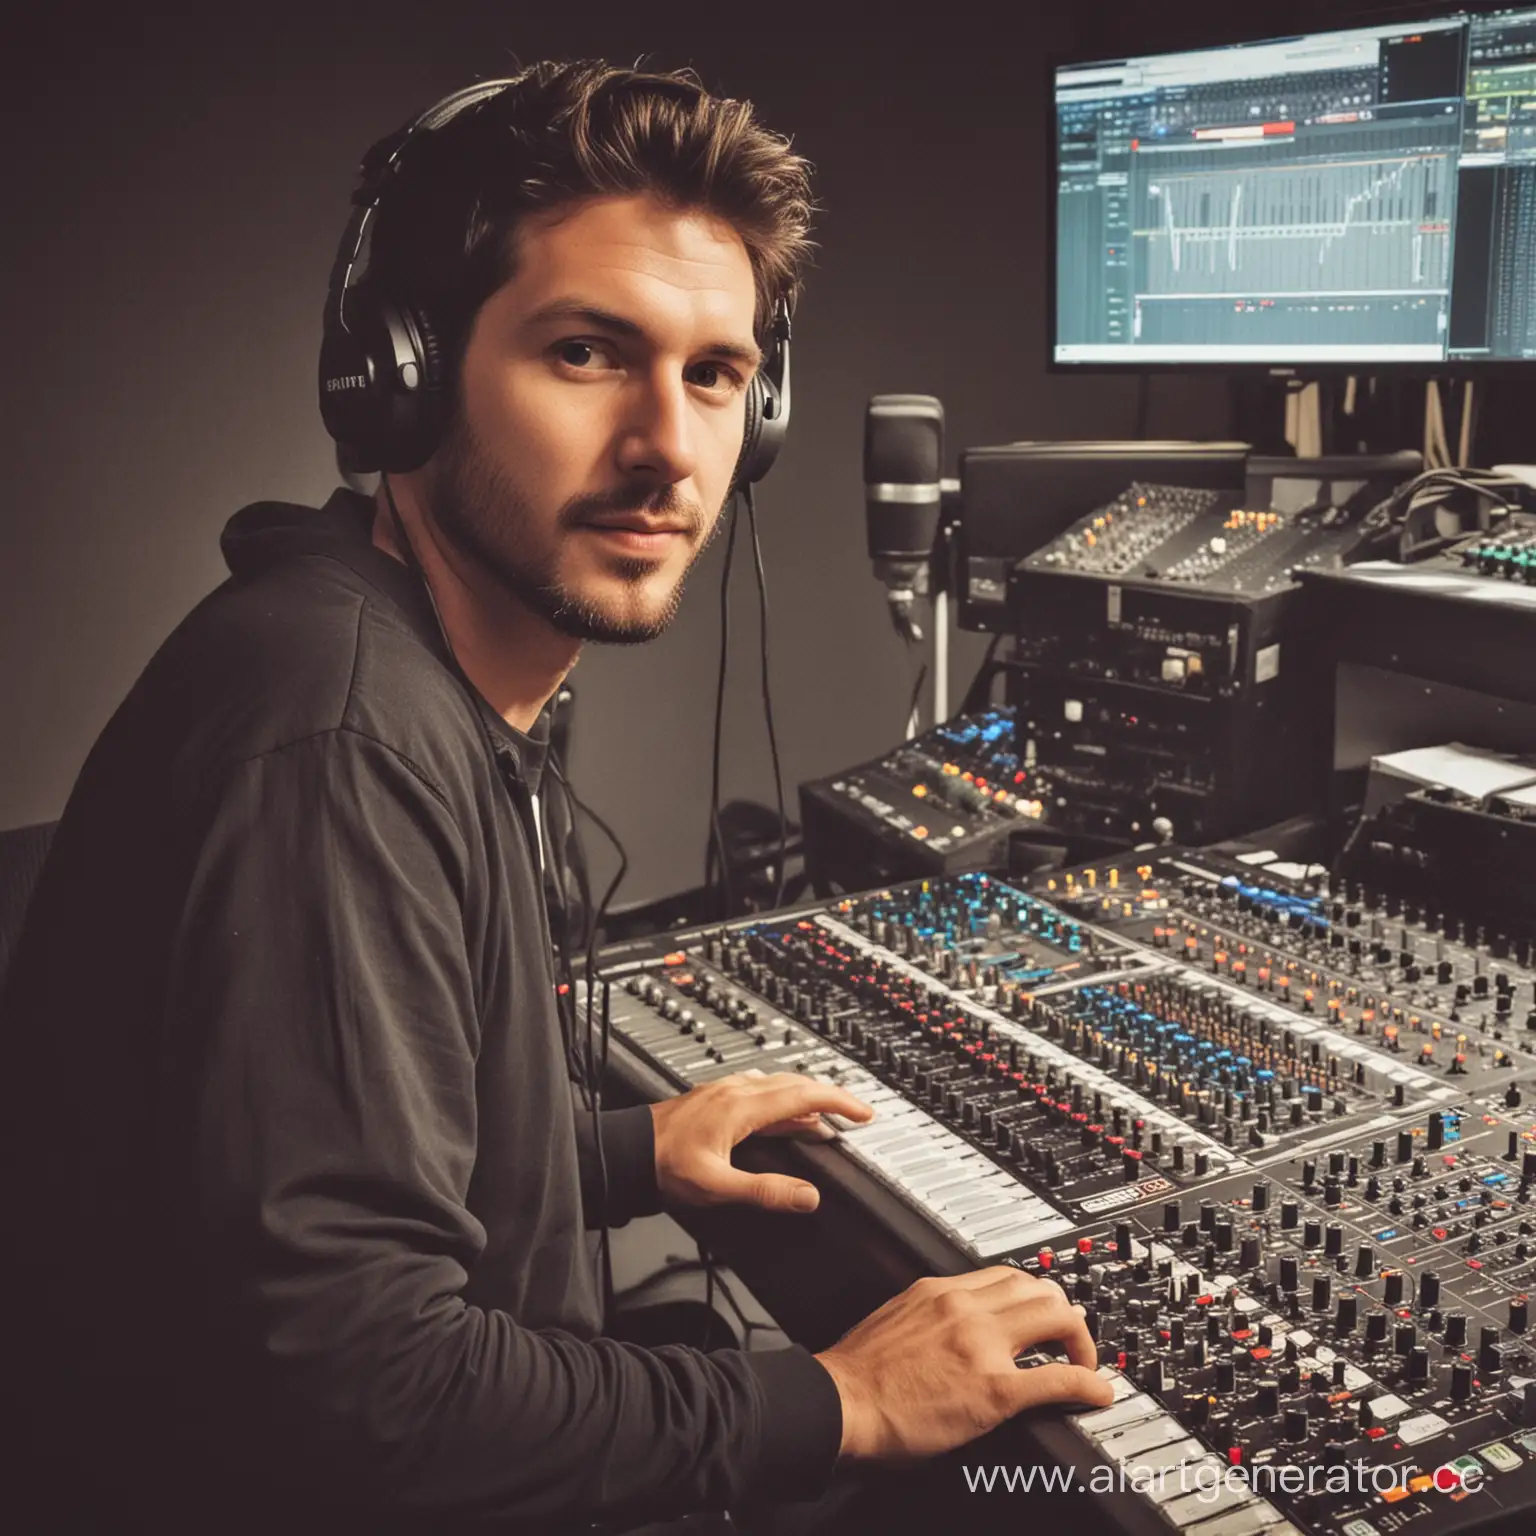 Professional-Sound-Engineer-Mixing-Audio-in-Modern-Studio